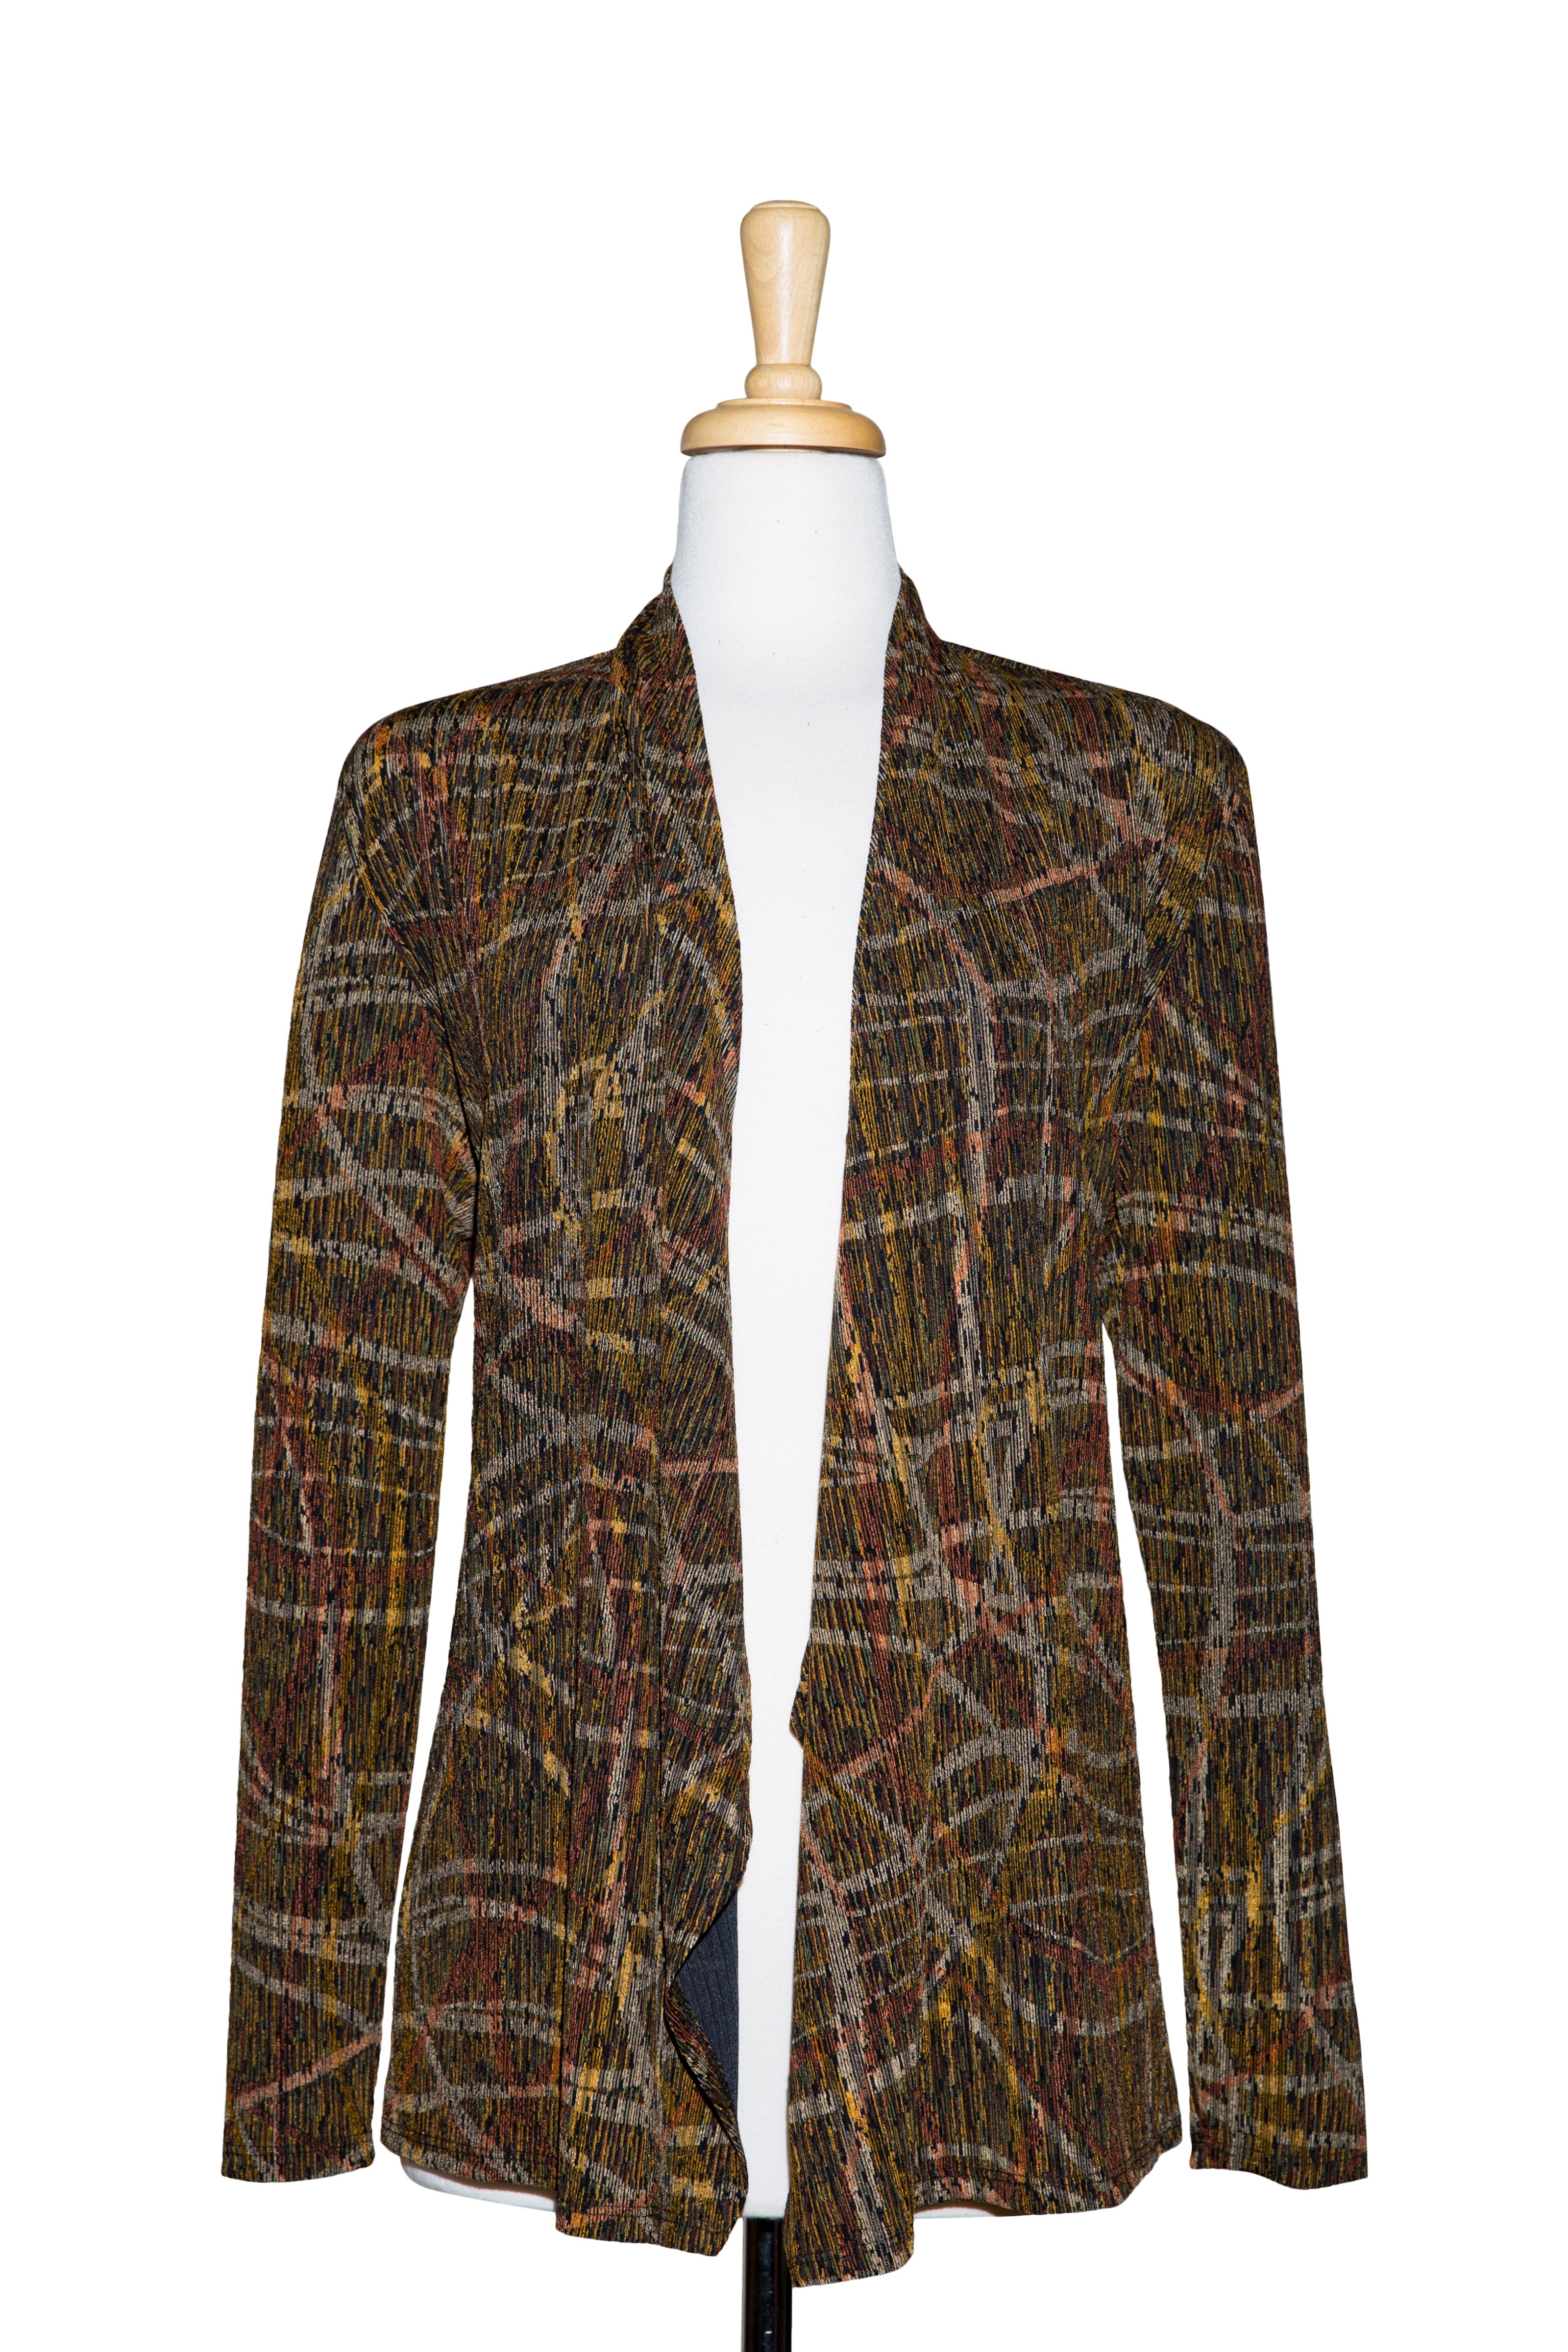 Plus Size Tan, Black and Rust Web Design Slinky Shawl Collar Jacket